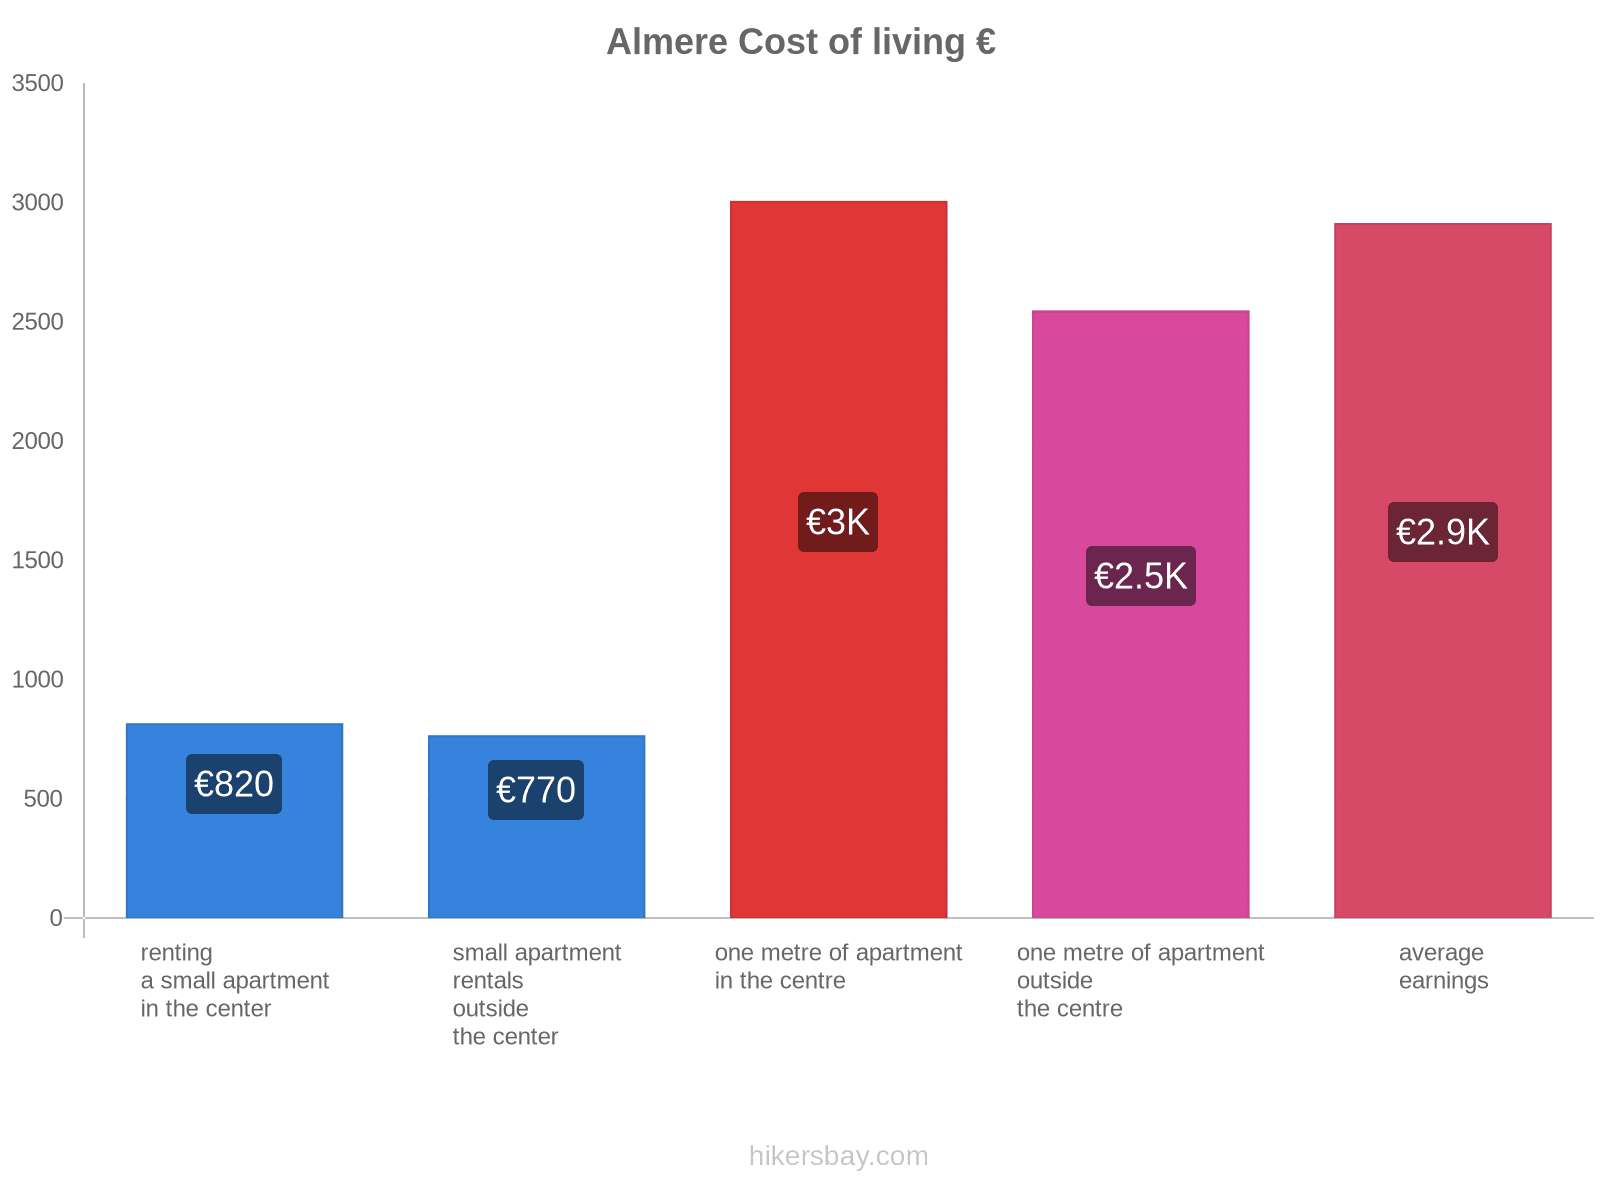 Almere cost of living hikersbay.com